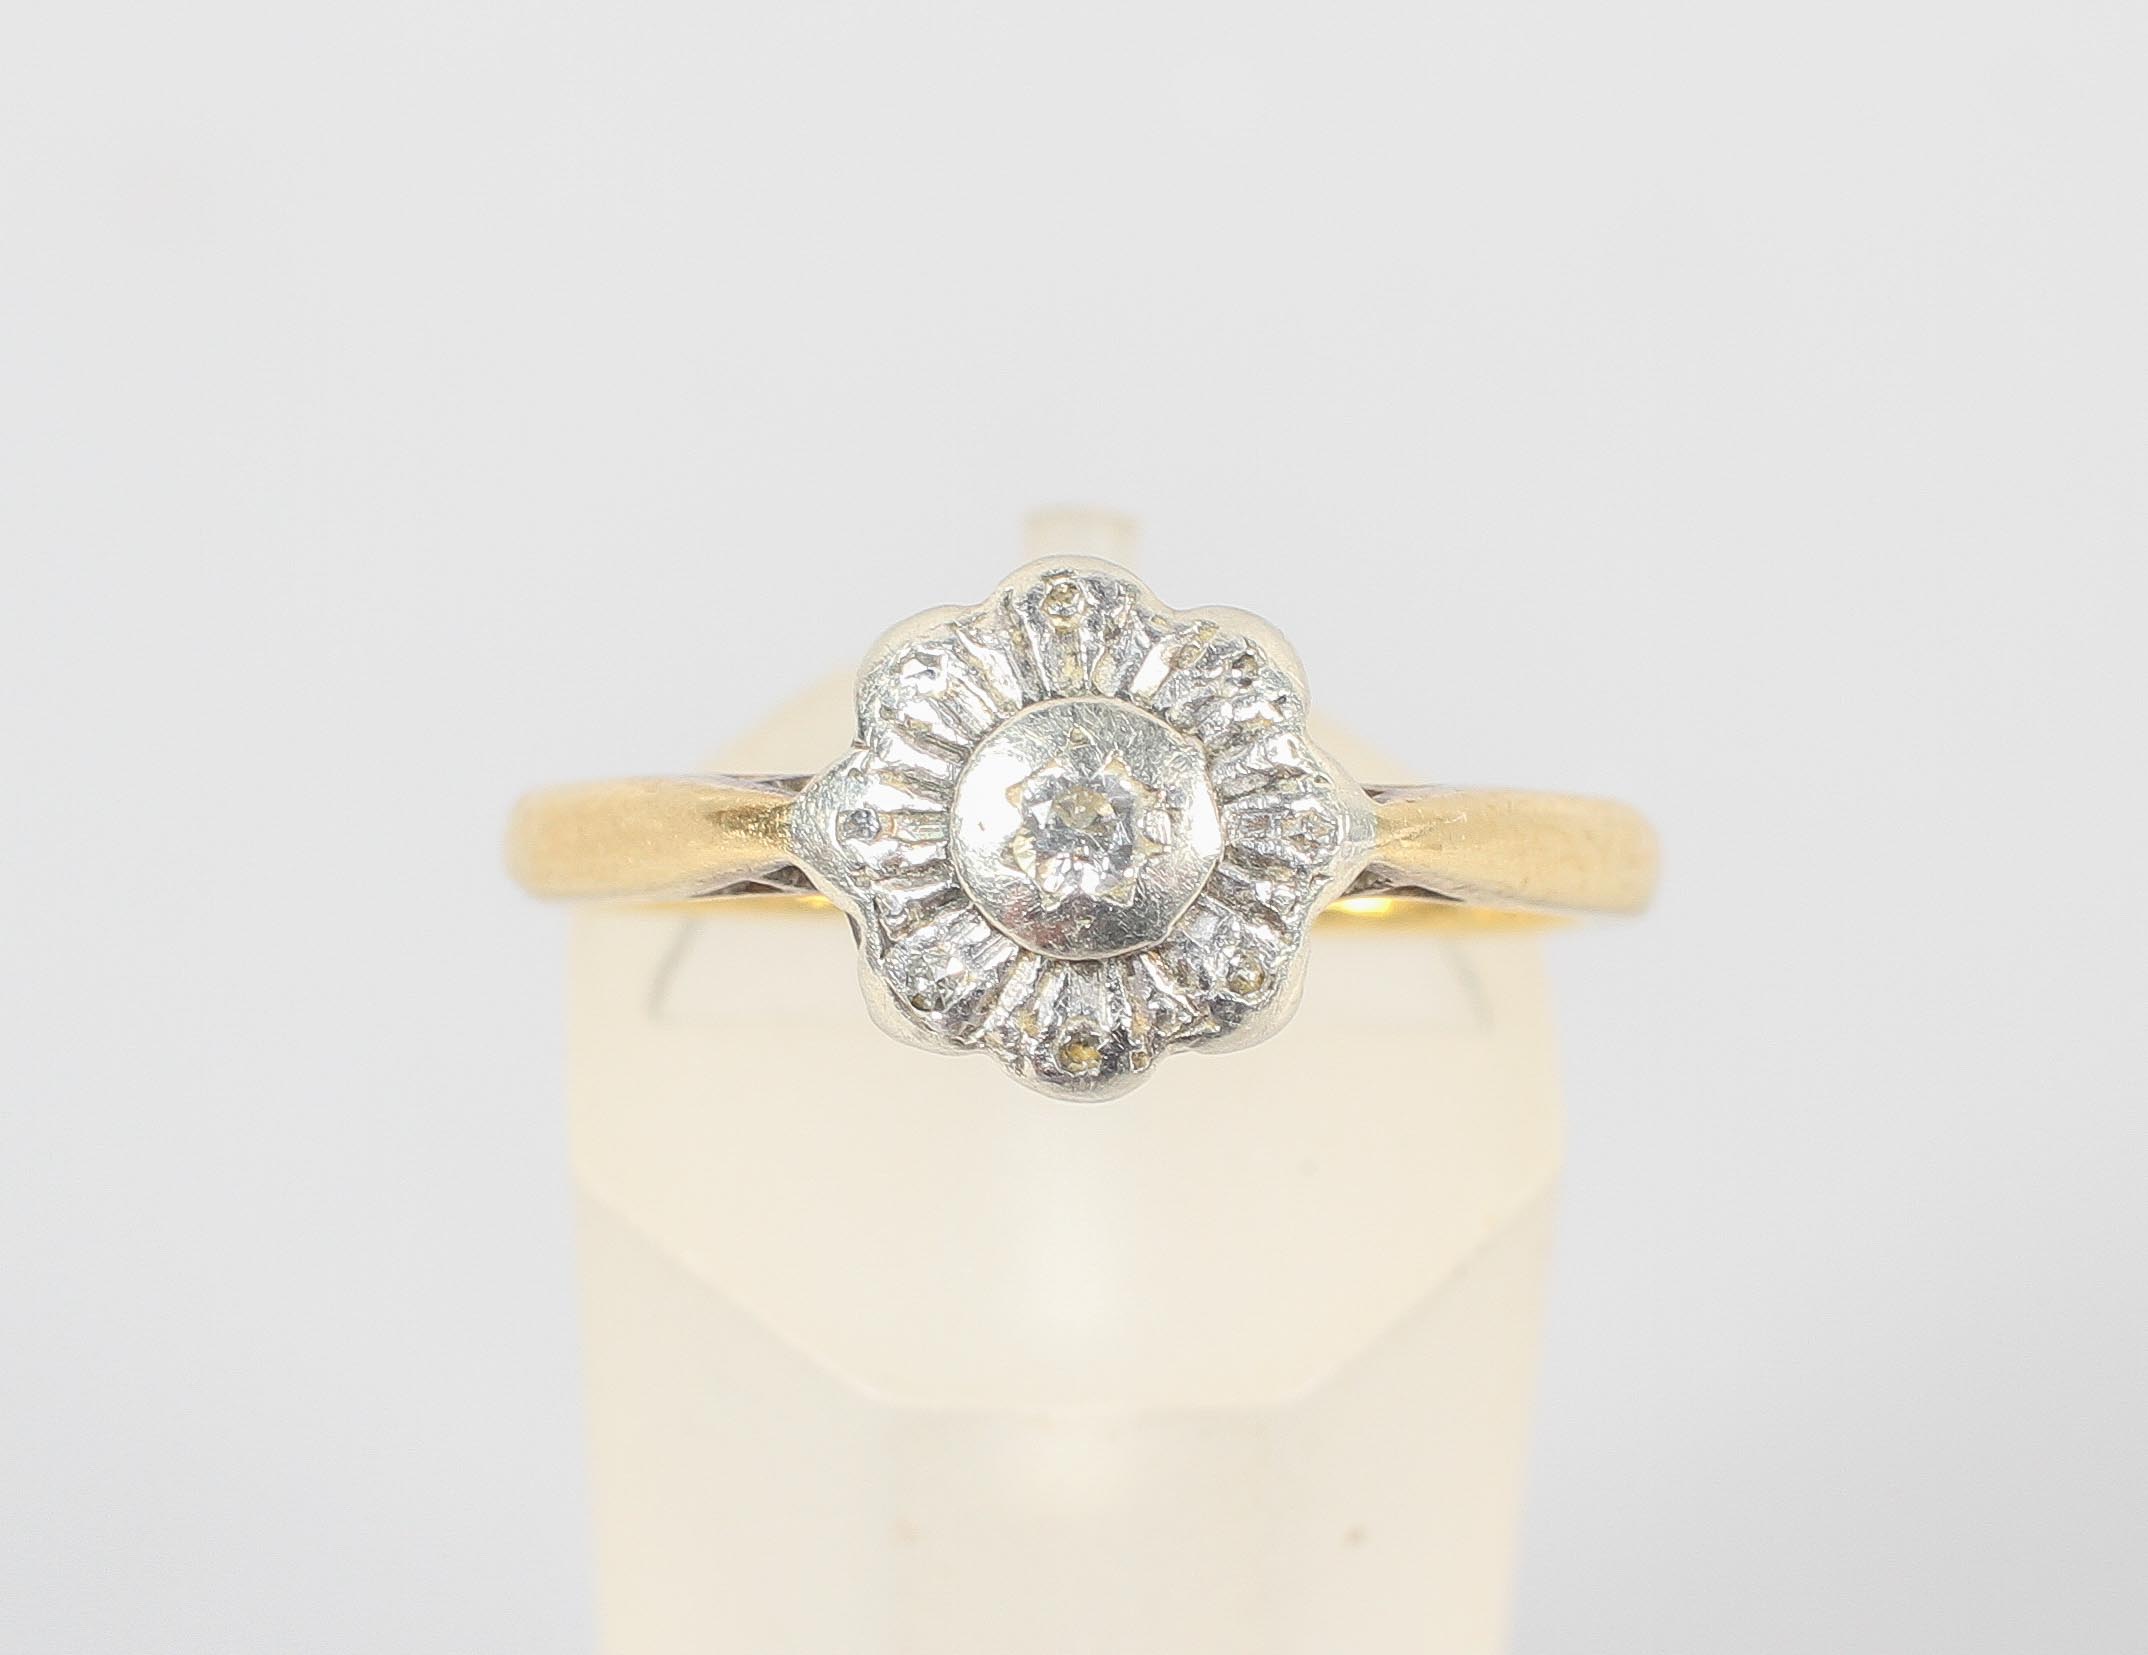 A yellow and white metal illusion set single stone diamond ring. No hallmark - stamped 18ct Plat.